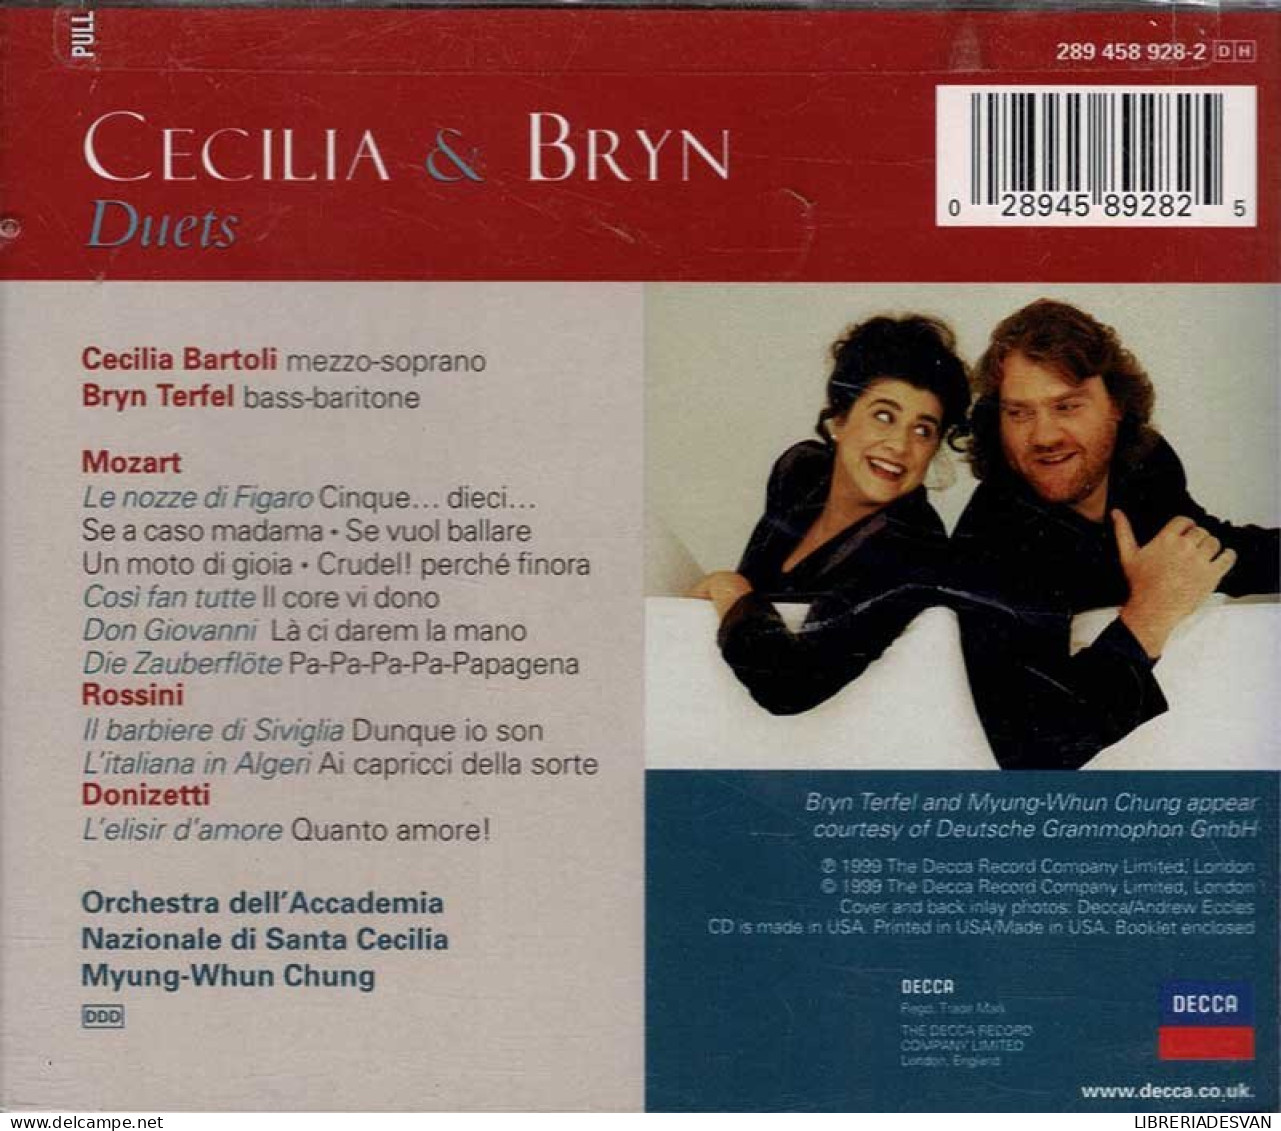 Cecilia Bartoli & Bryn Terfel, Myung-Whun Chung - Duets. DVD - Classical